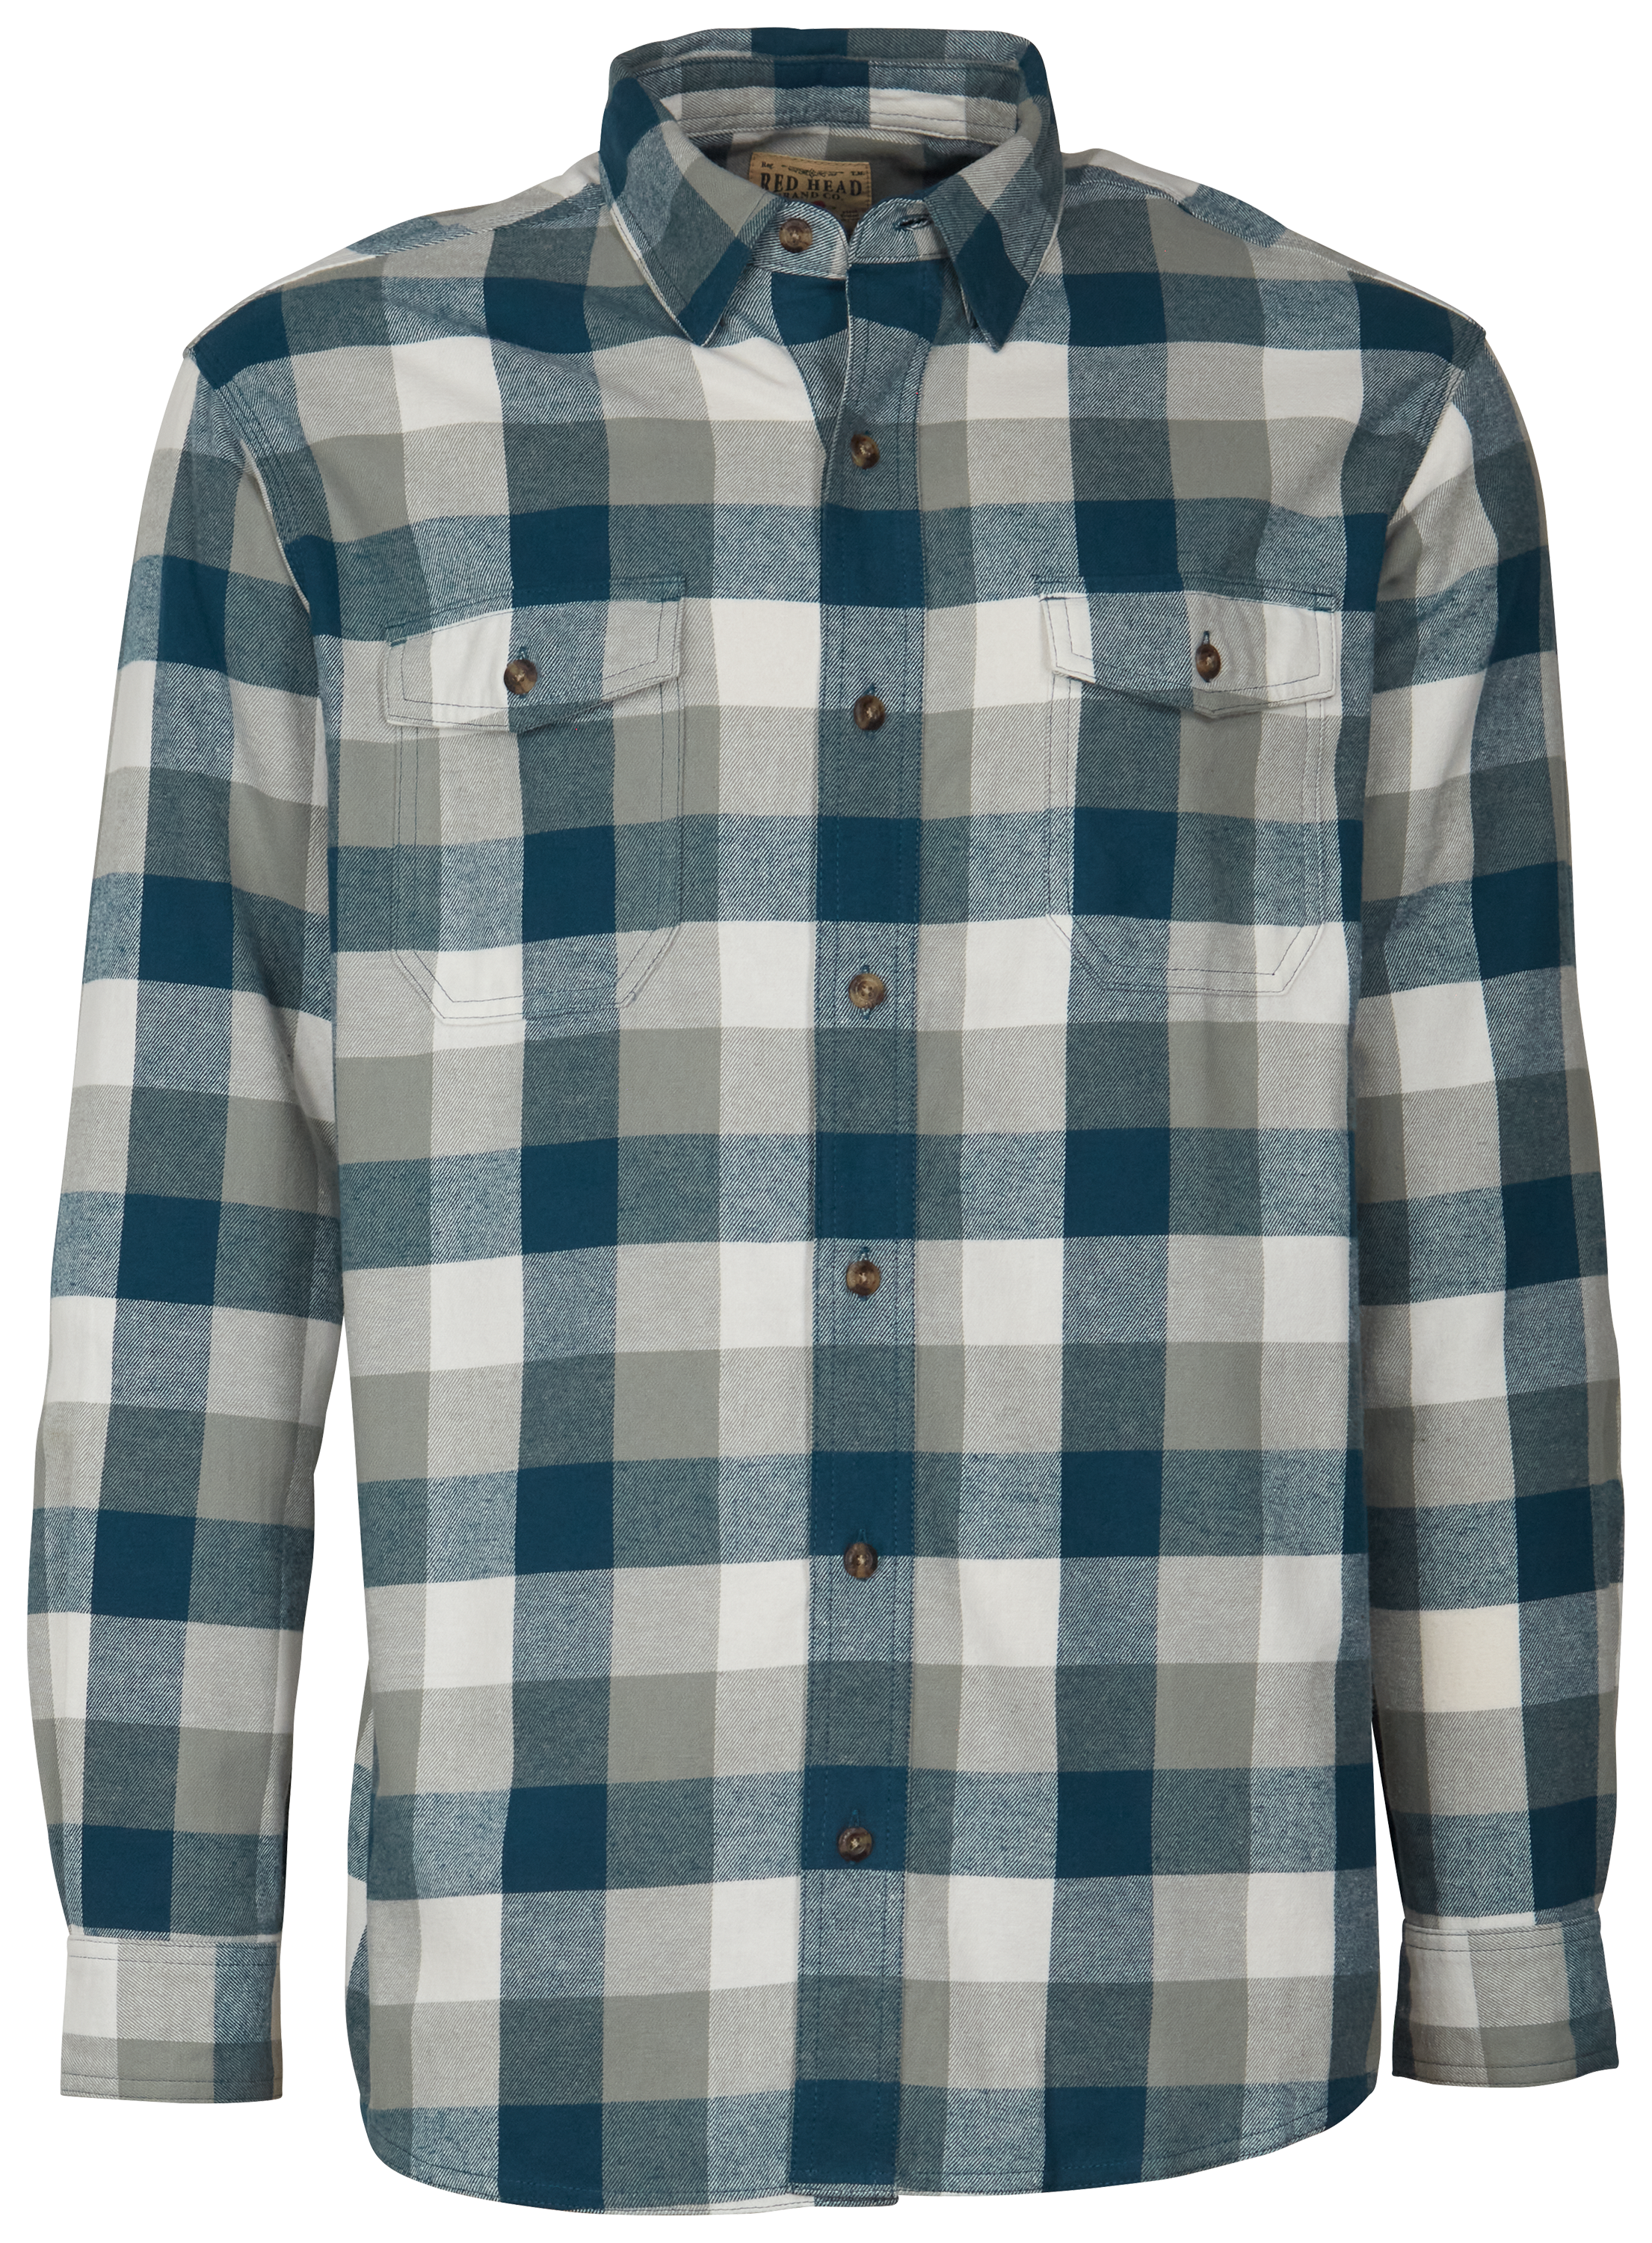 RedHead Buffalo Creek Flannel Long-Sleeve Shirt for Men - Navy/White - S